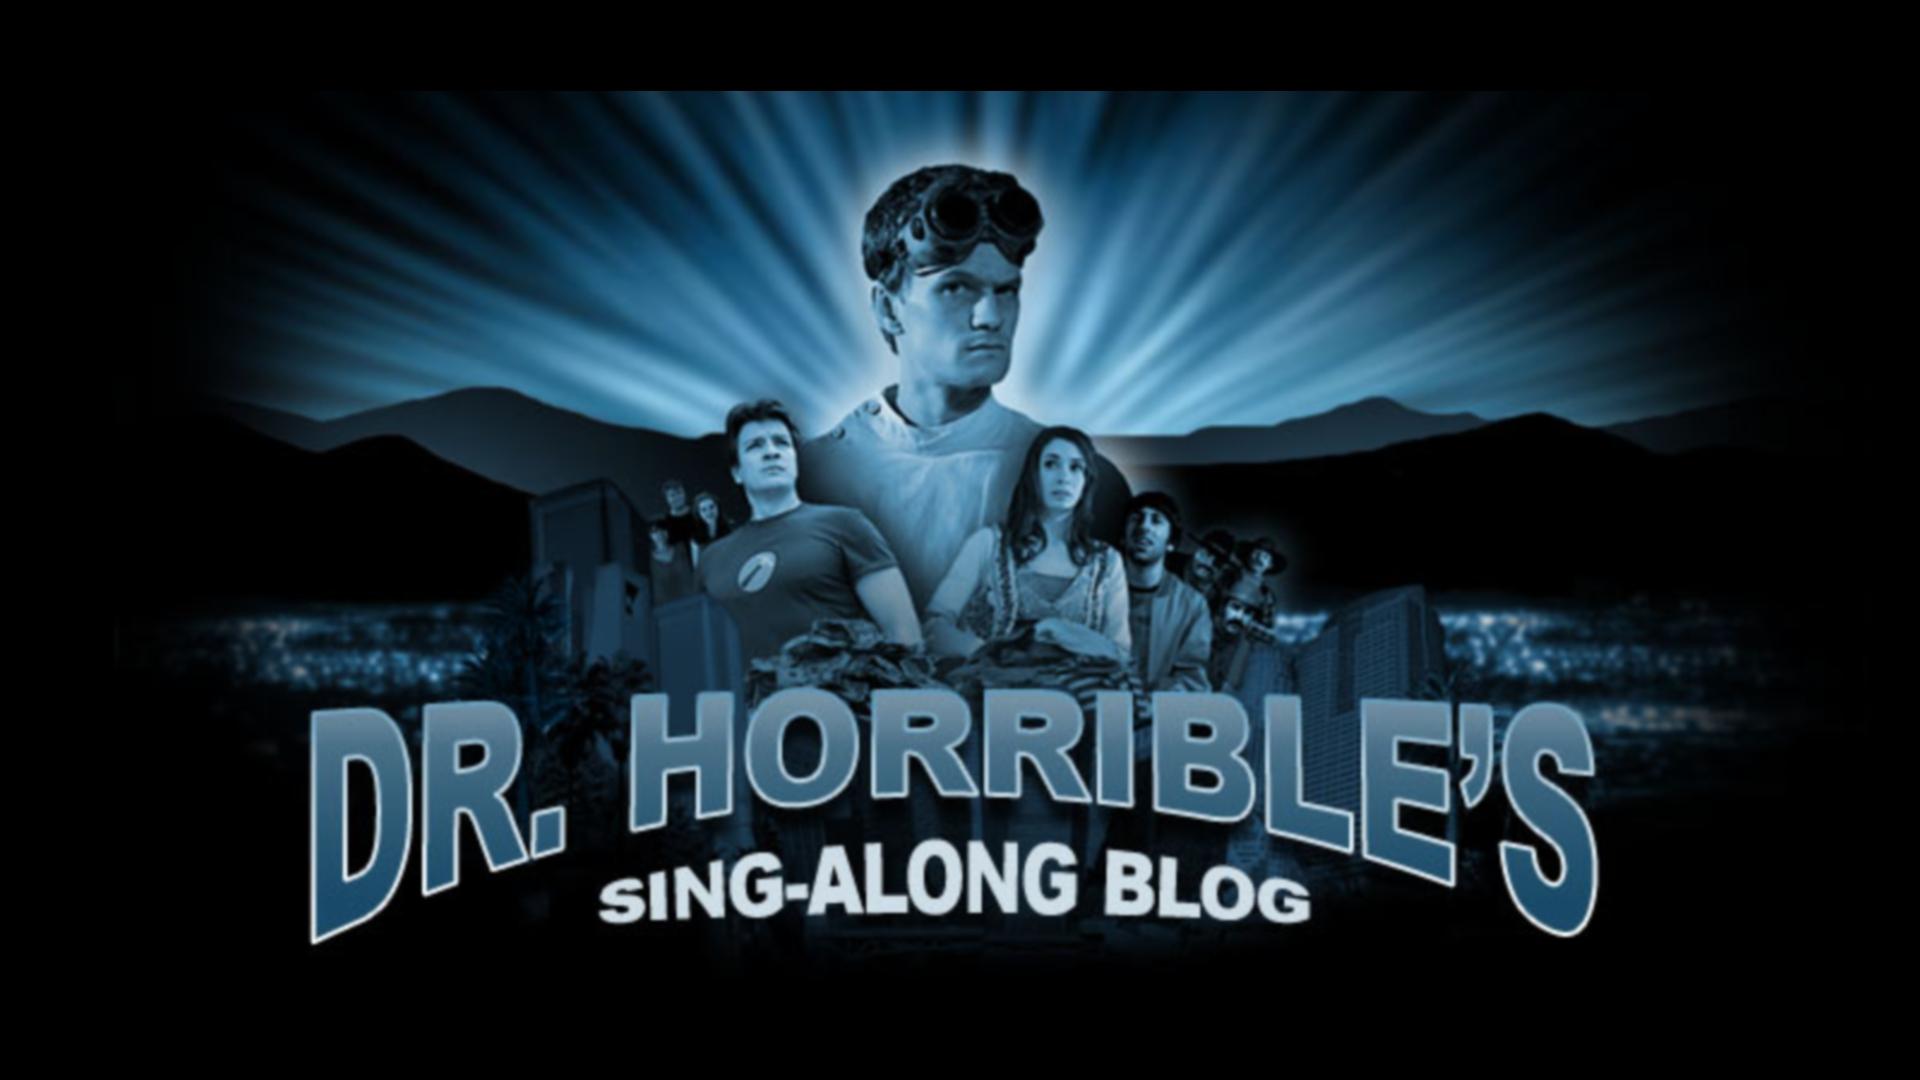 Doctor Horrible's Sing-Along Blog